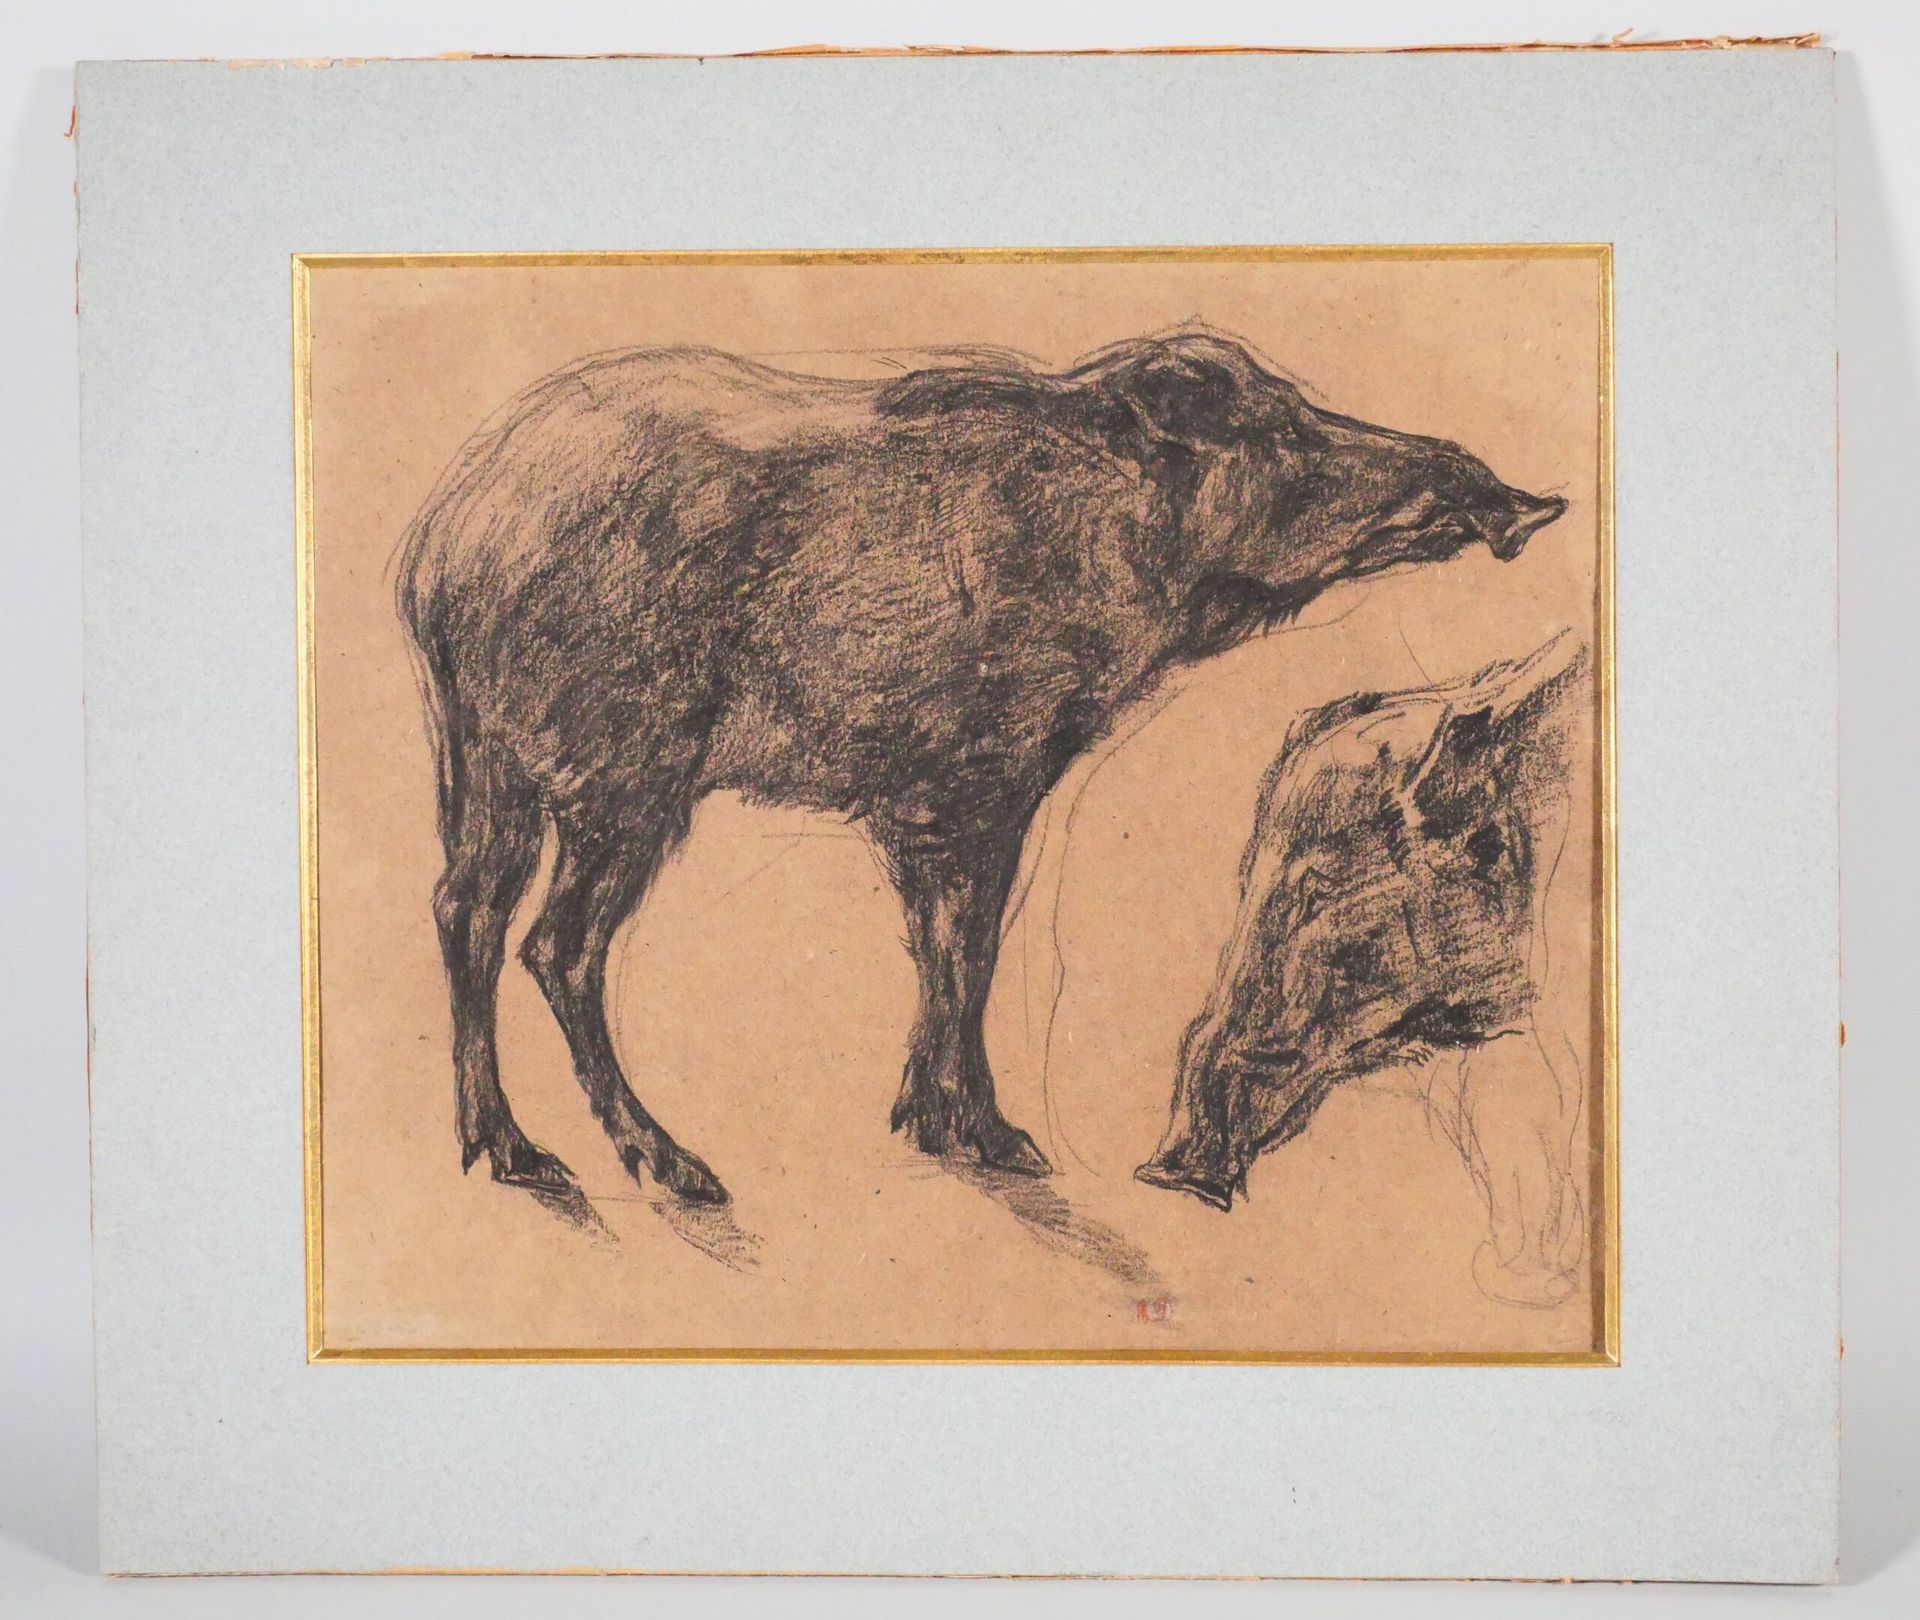 Null 19th century French school
Study of a wild boar
Black stone
Dimensions: 27.&hellip;